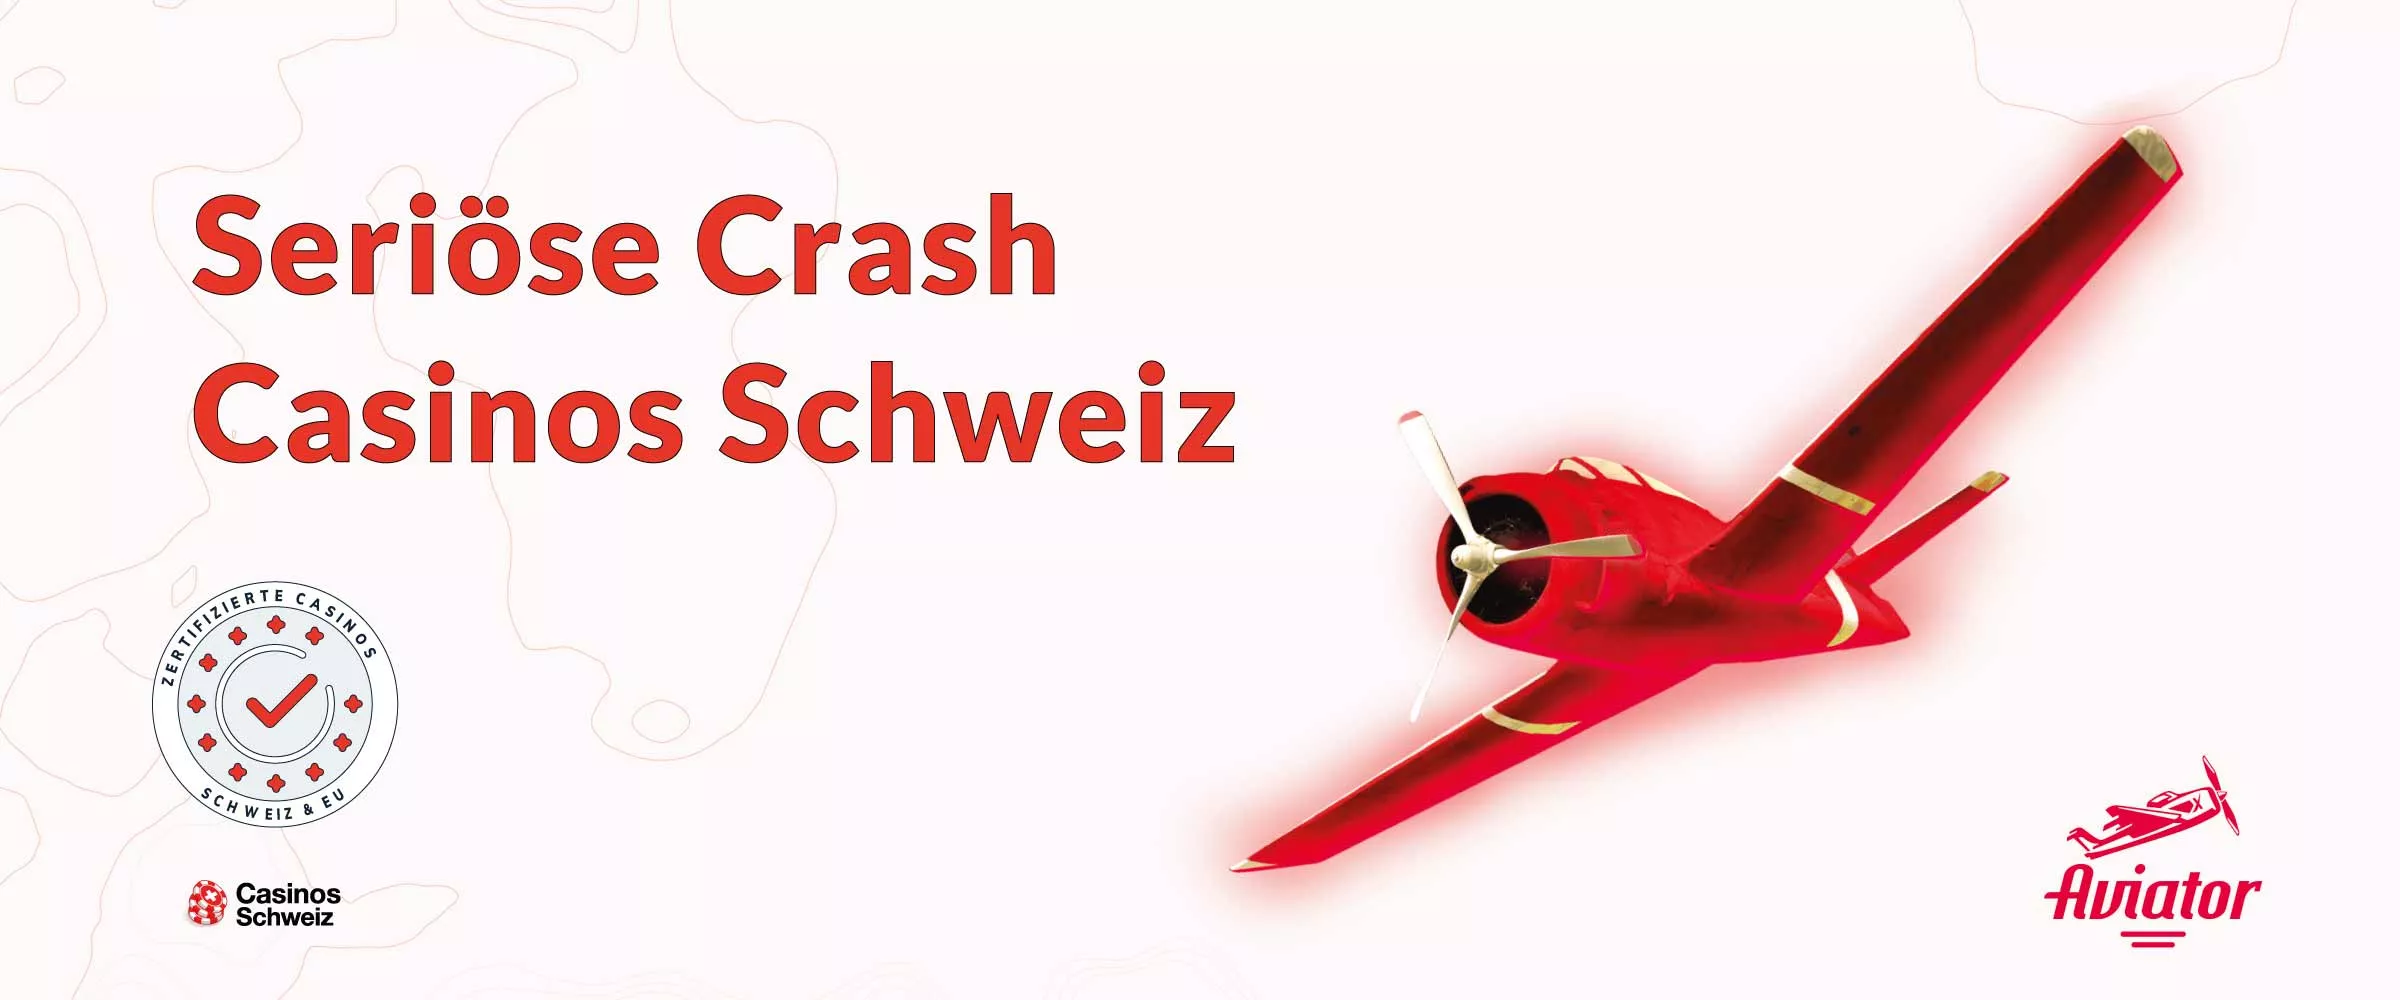 Seriöse Crash Casinos Schweiz